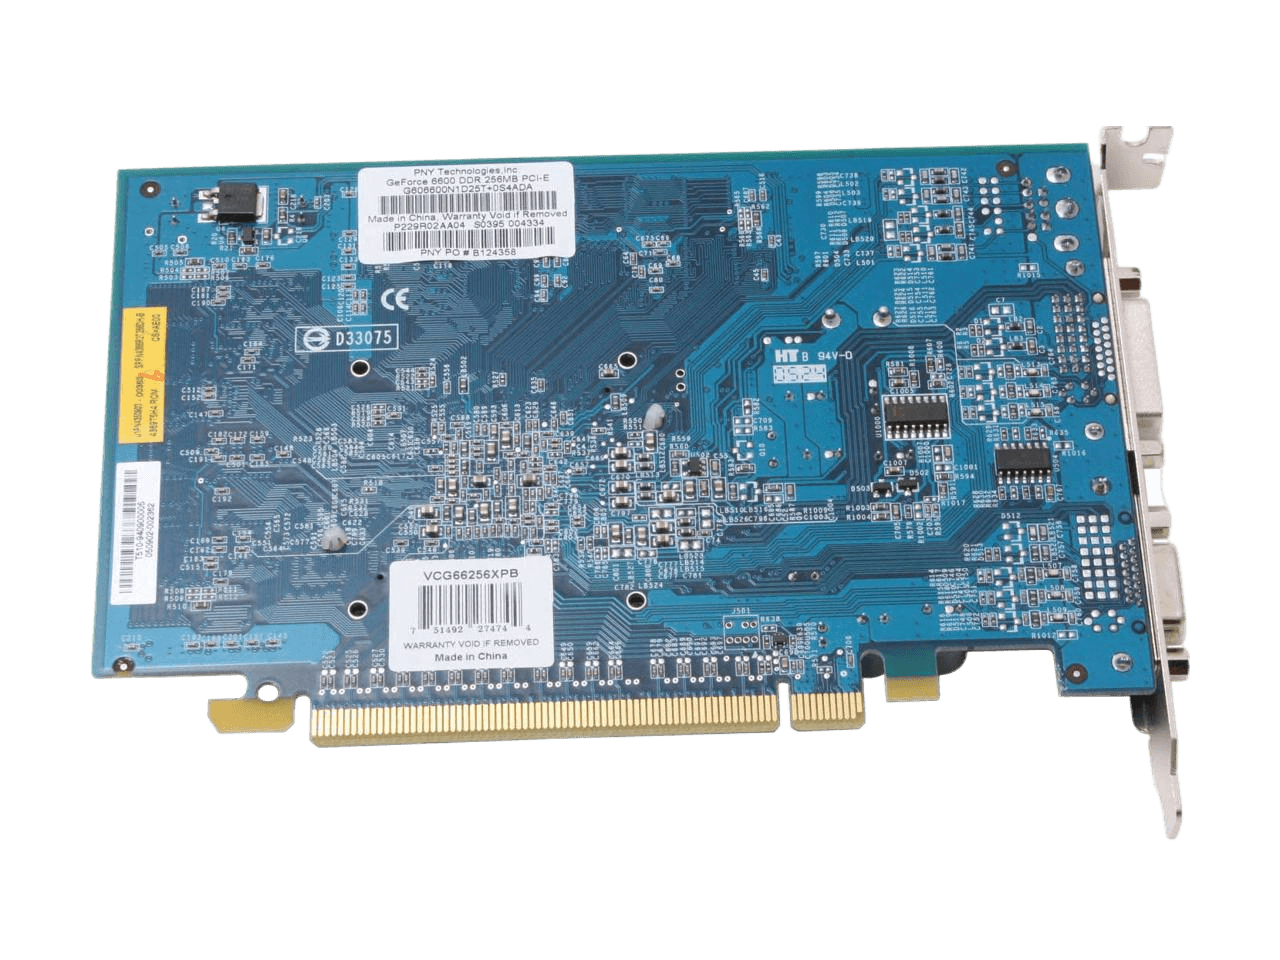 PNY GeForce 6600 256MB DDR PCI Express x16 SLI Support Video Card VCG66256XPB